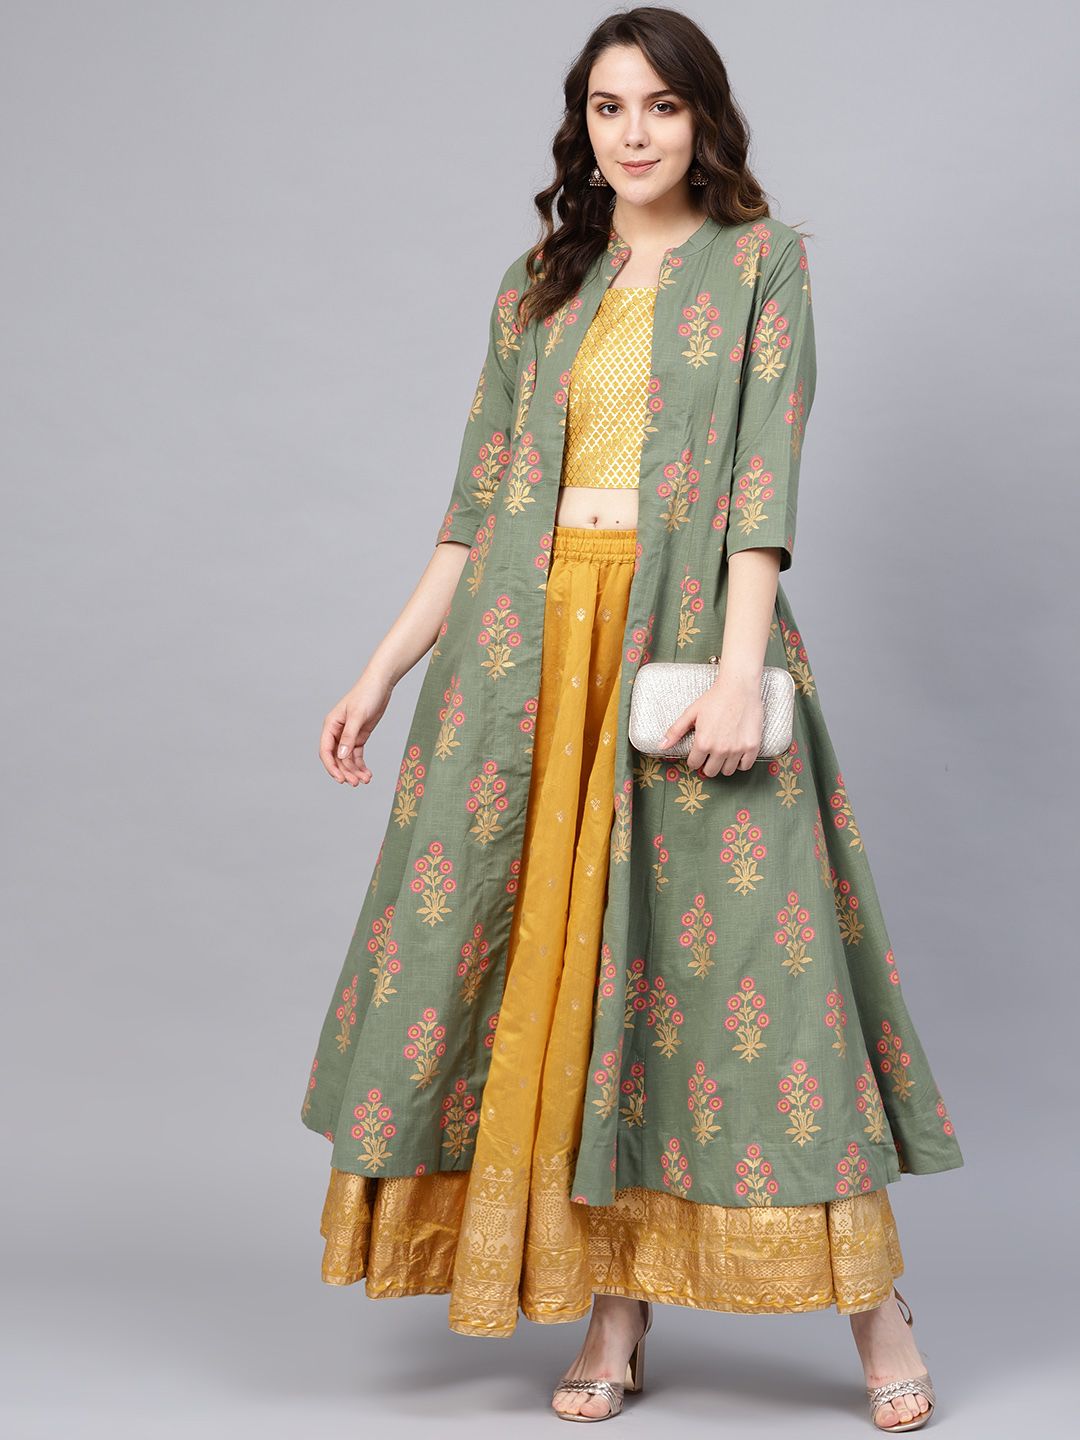 Biba Women Mustard Yellow & Green Woven Design Top with Skirt & Ethnic Jacket Price in India